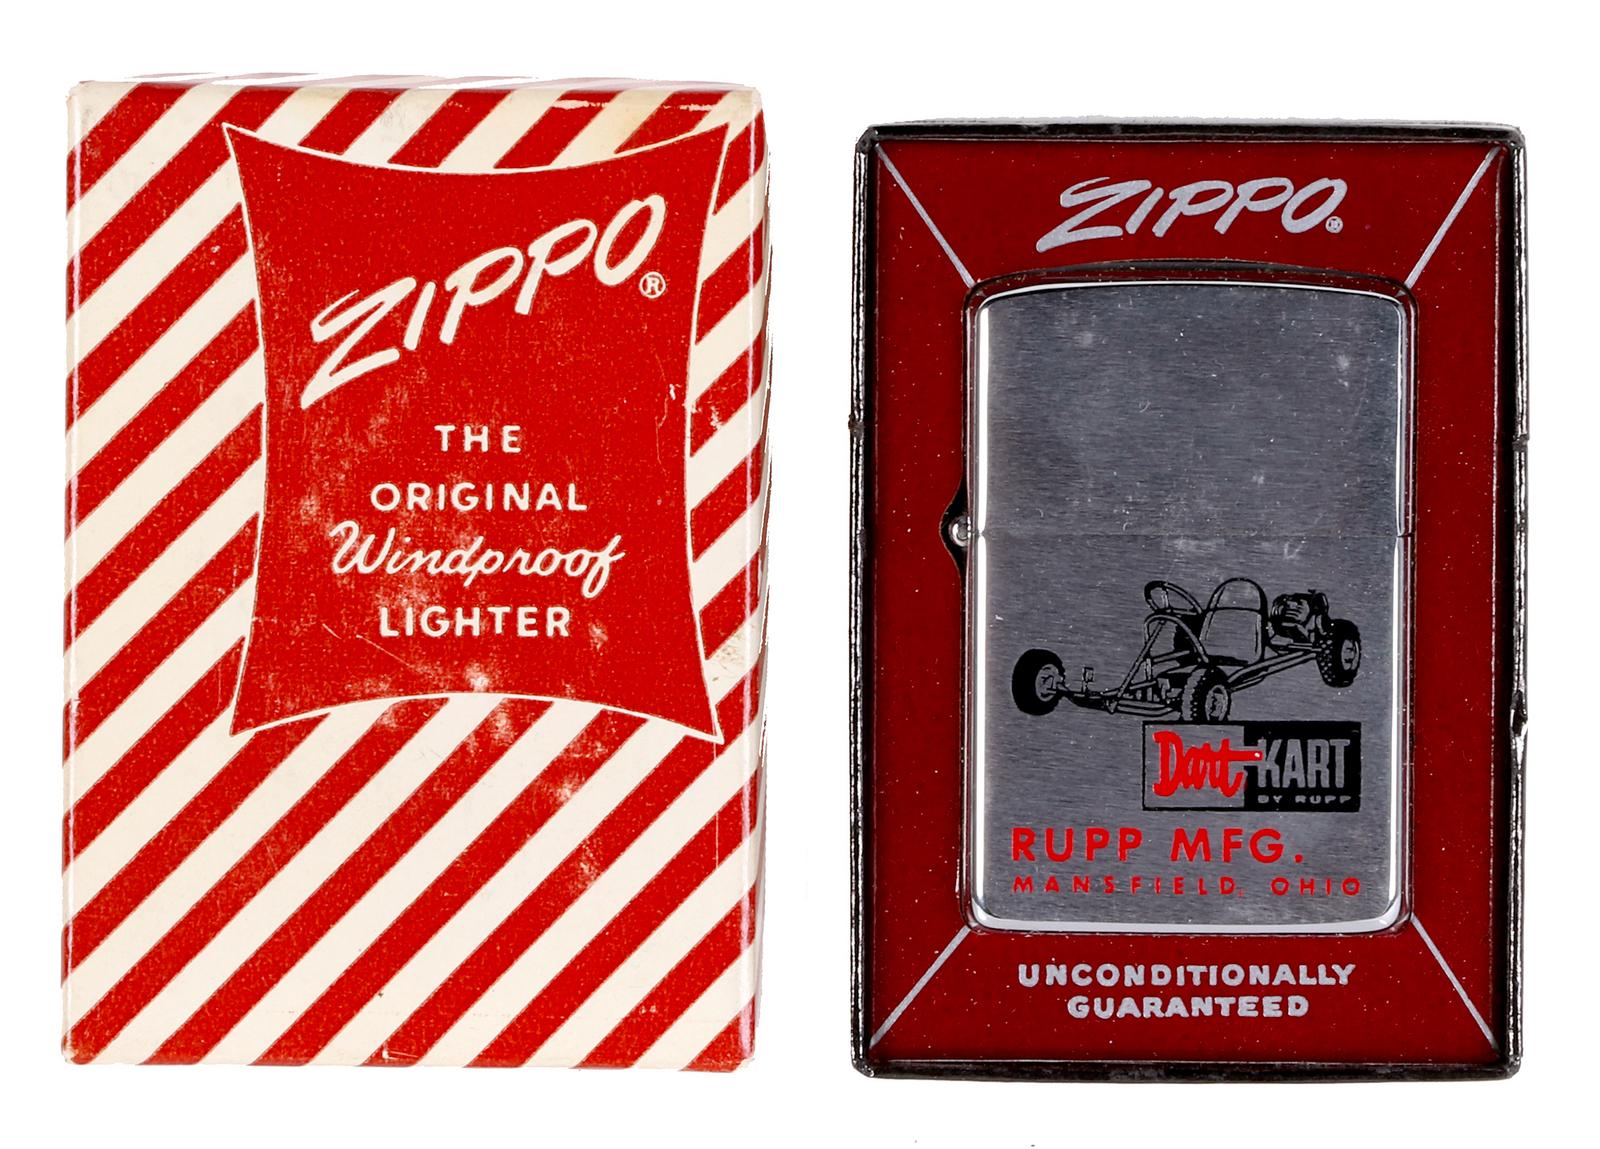 Zippo Lighter - The Original Windproof Lighter